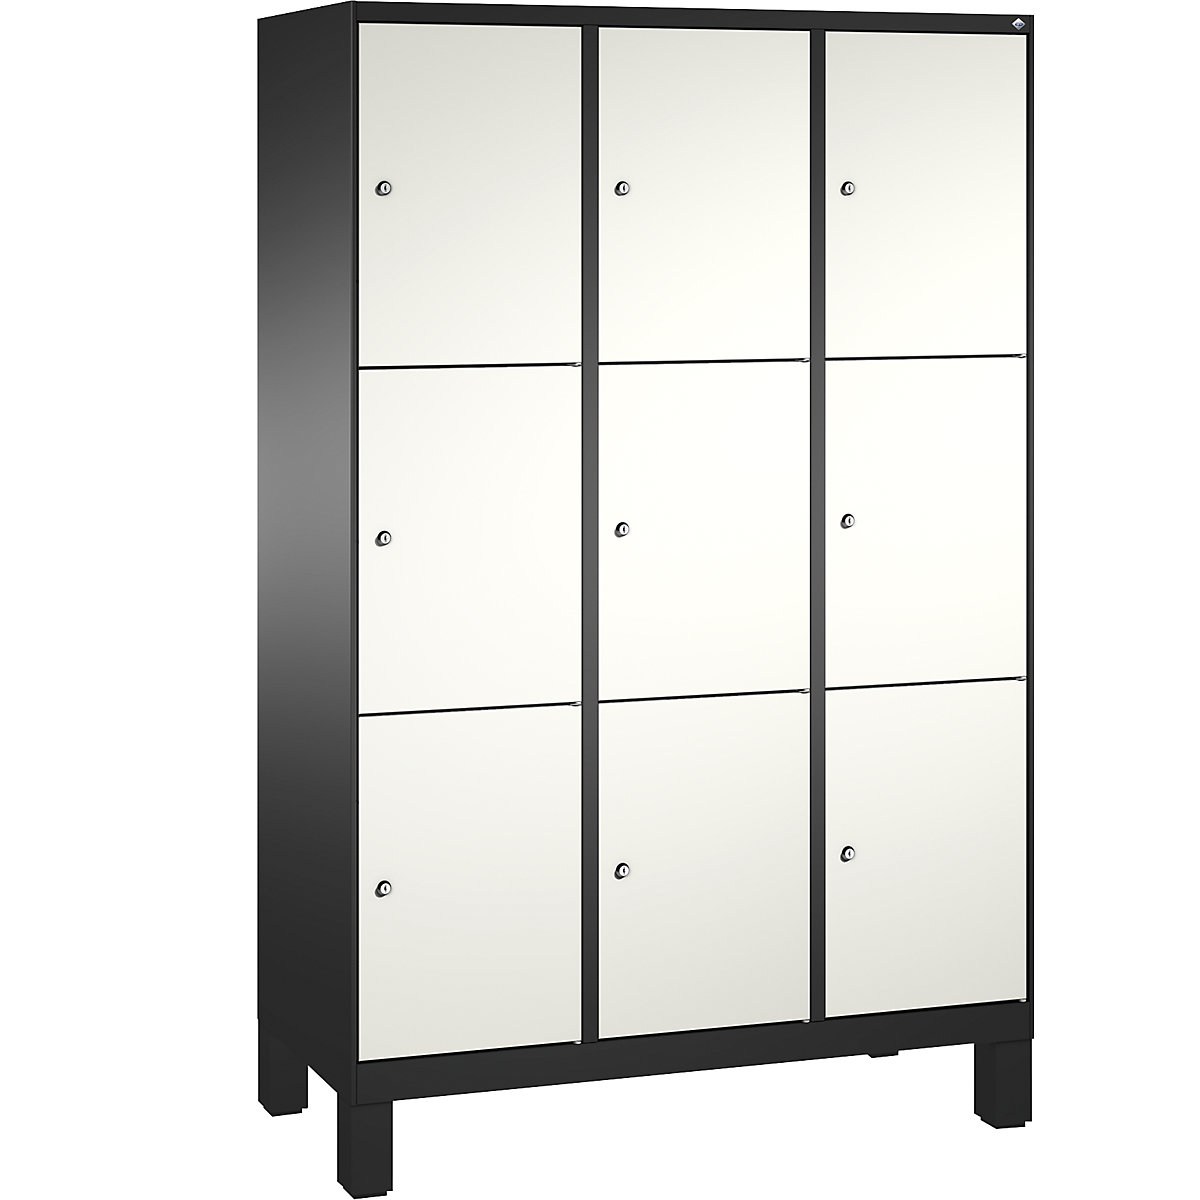 EVOLO locker unit, with feet – C+P, 3 compartments, 3 shelf compartments each, compartment width 400 mm, black grey / traffic white-3